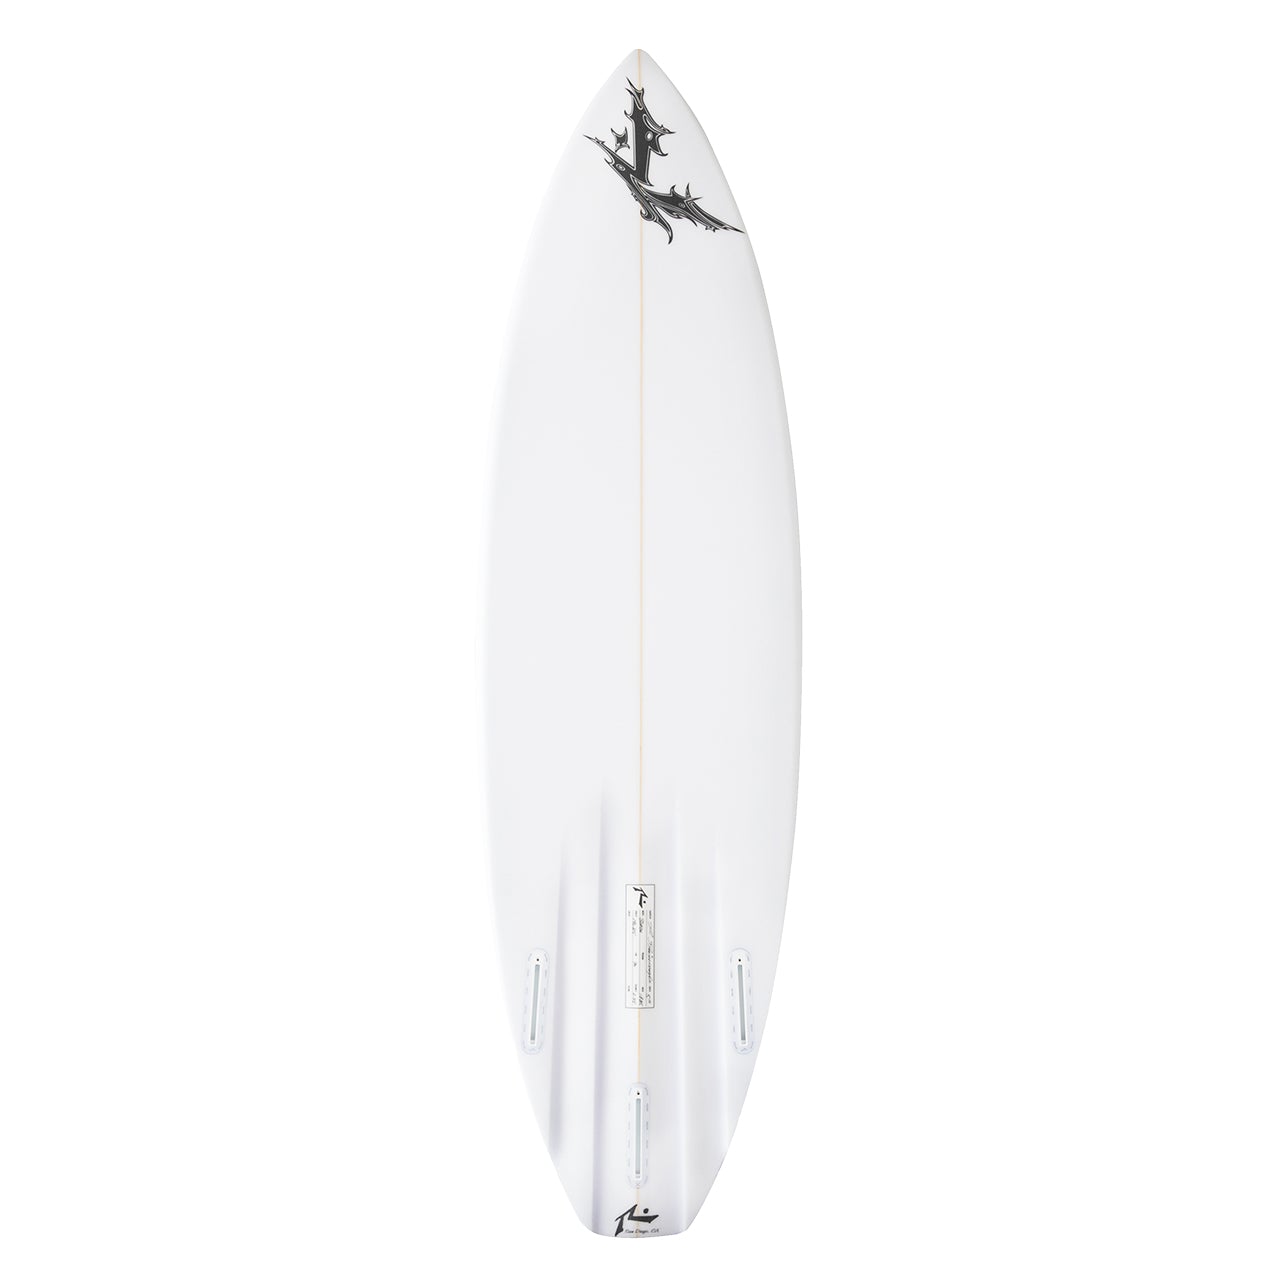 Blade Deck View - Rusty Surfboard